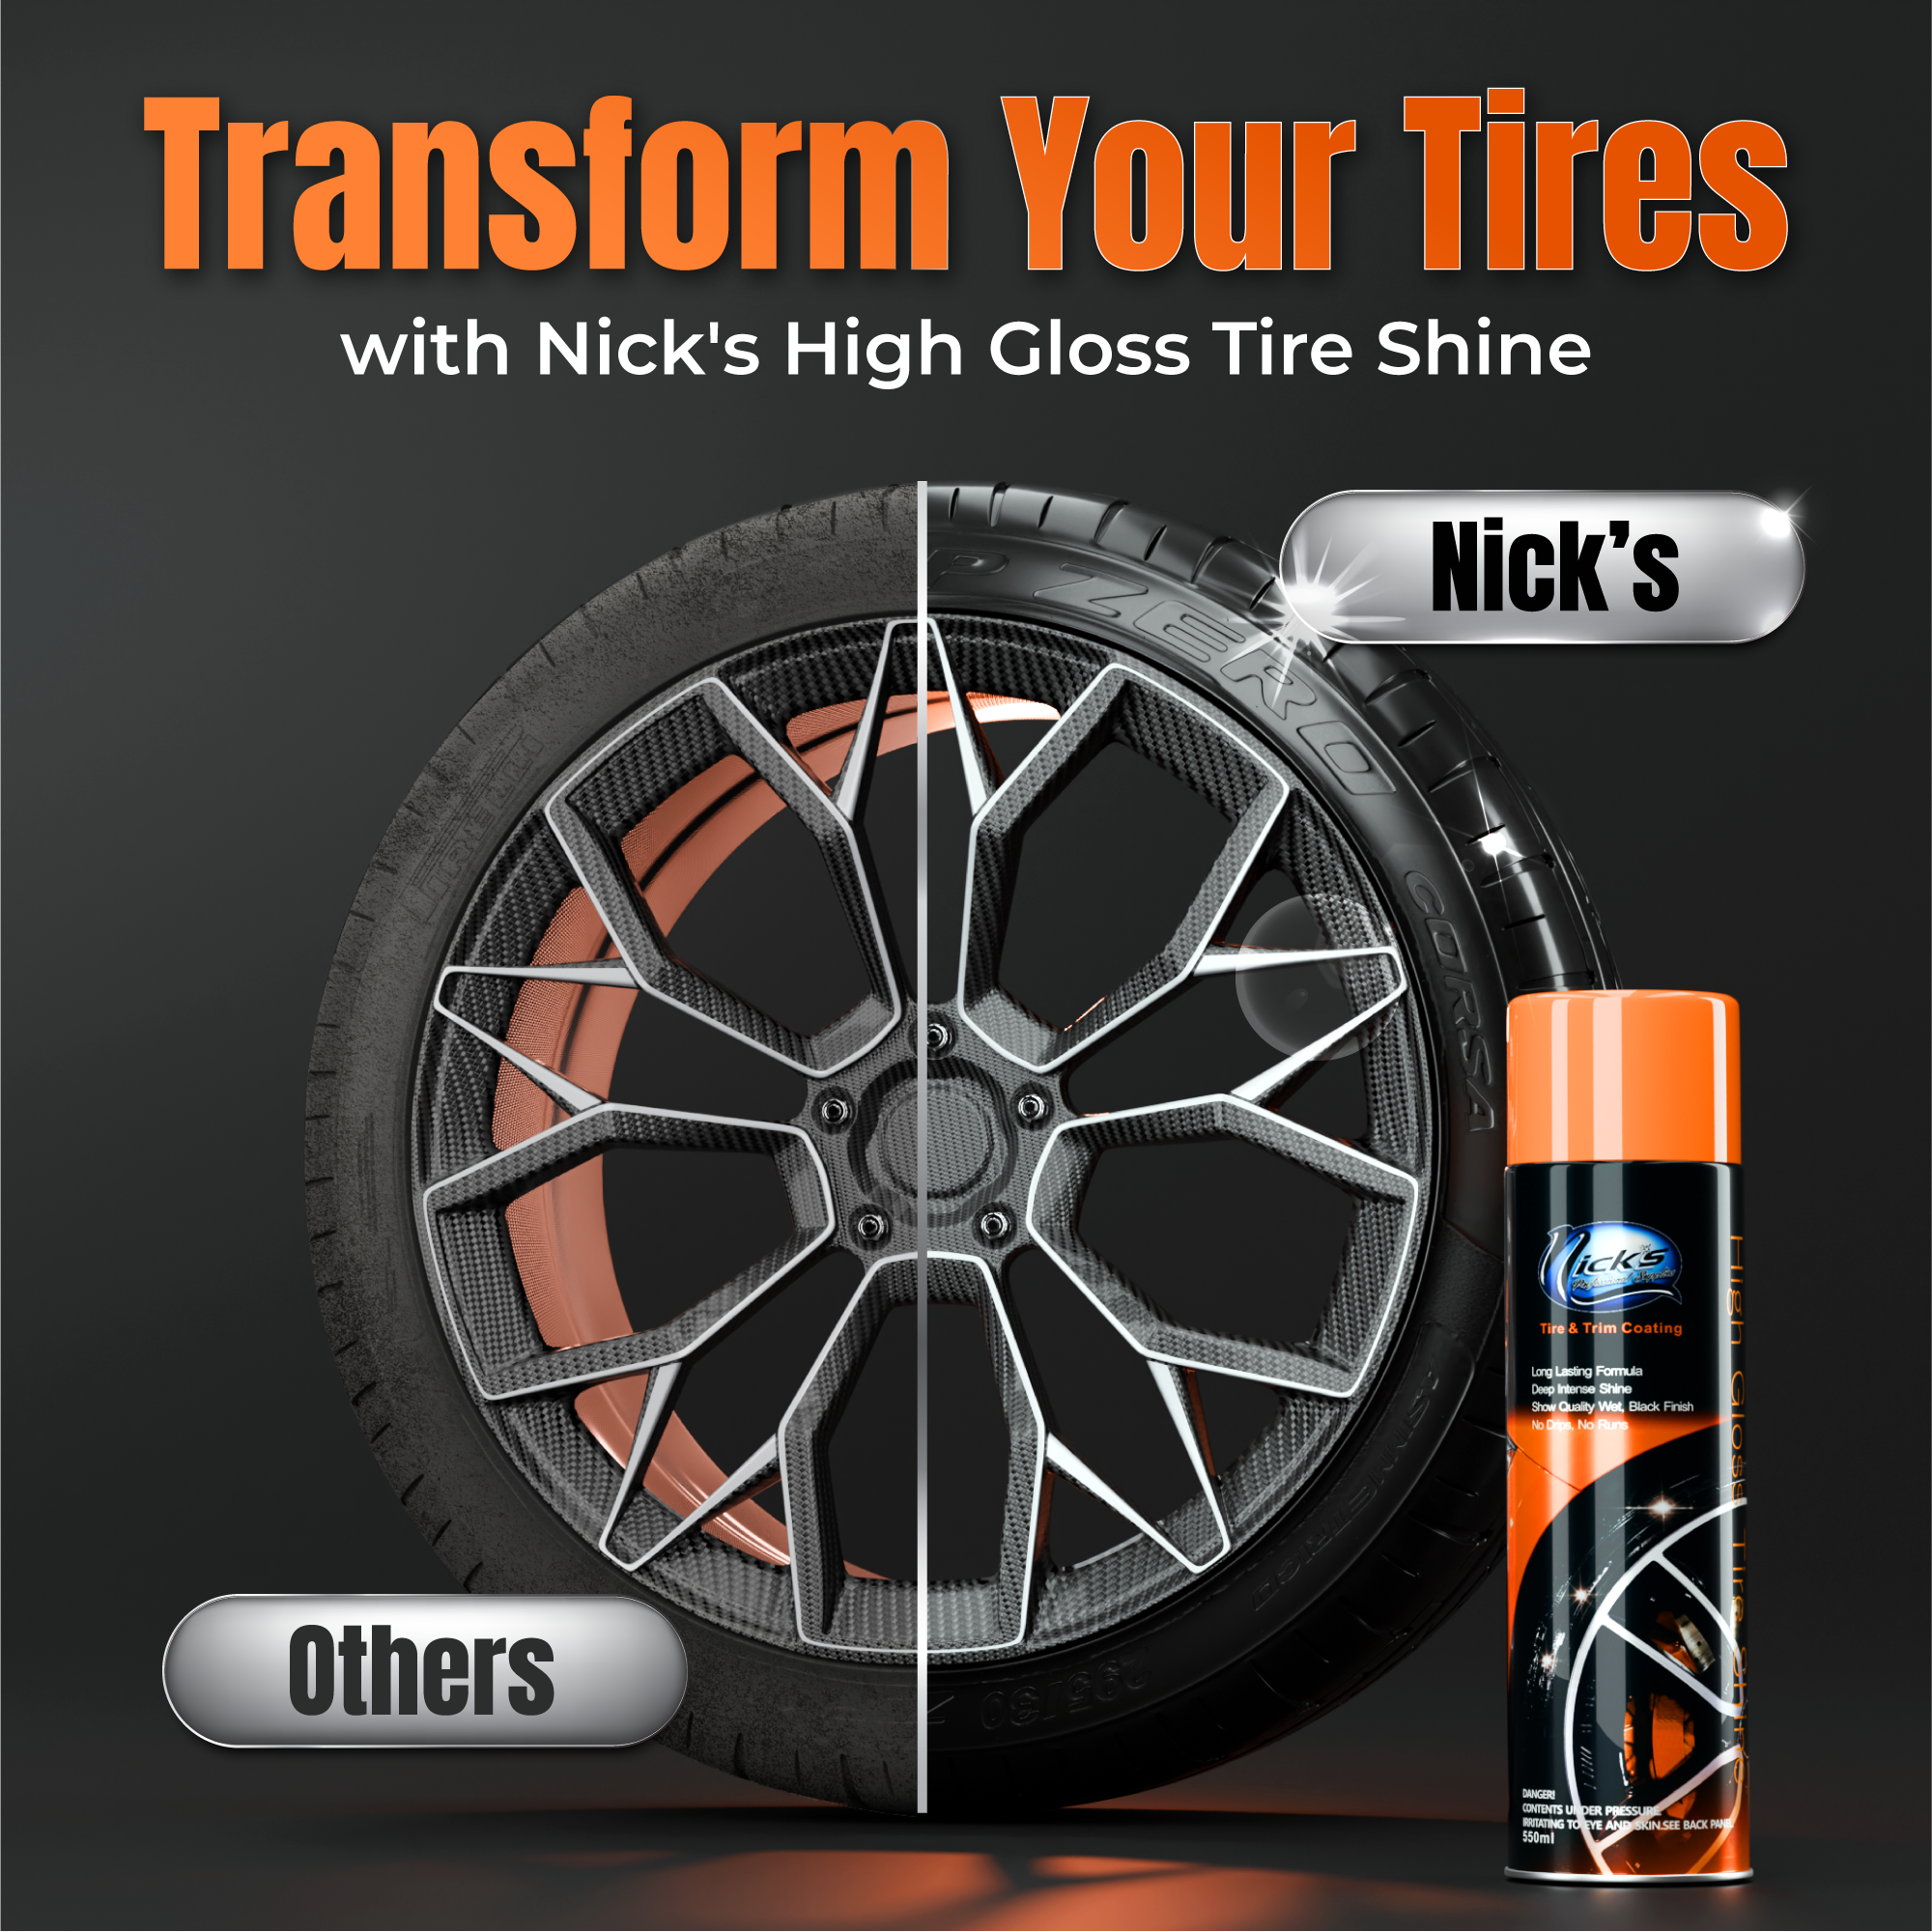 Nick's Crystal Ceramic Coating Wax – Nick's Professional Supplies